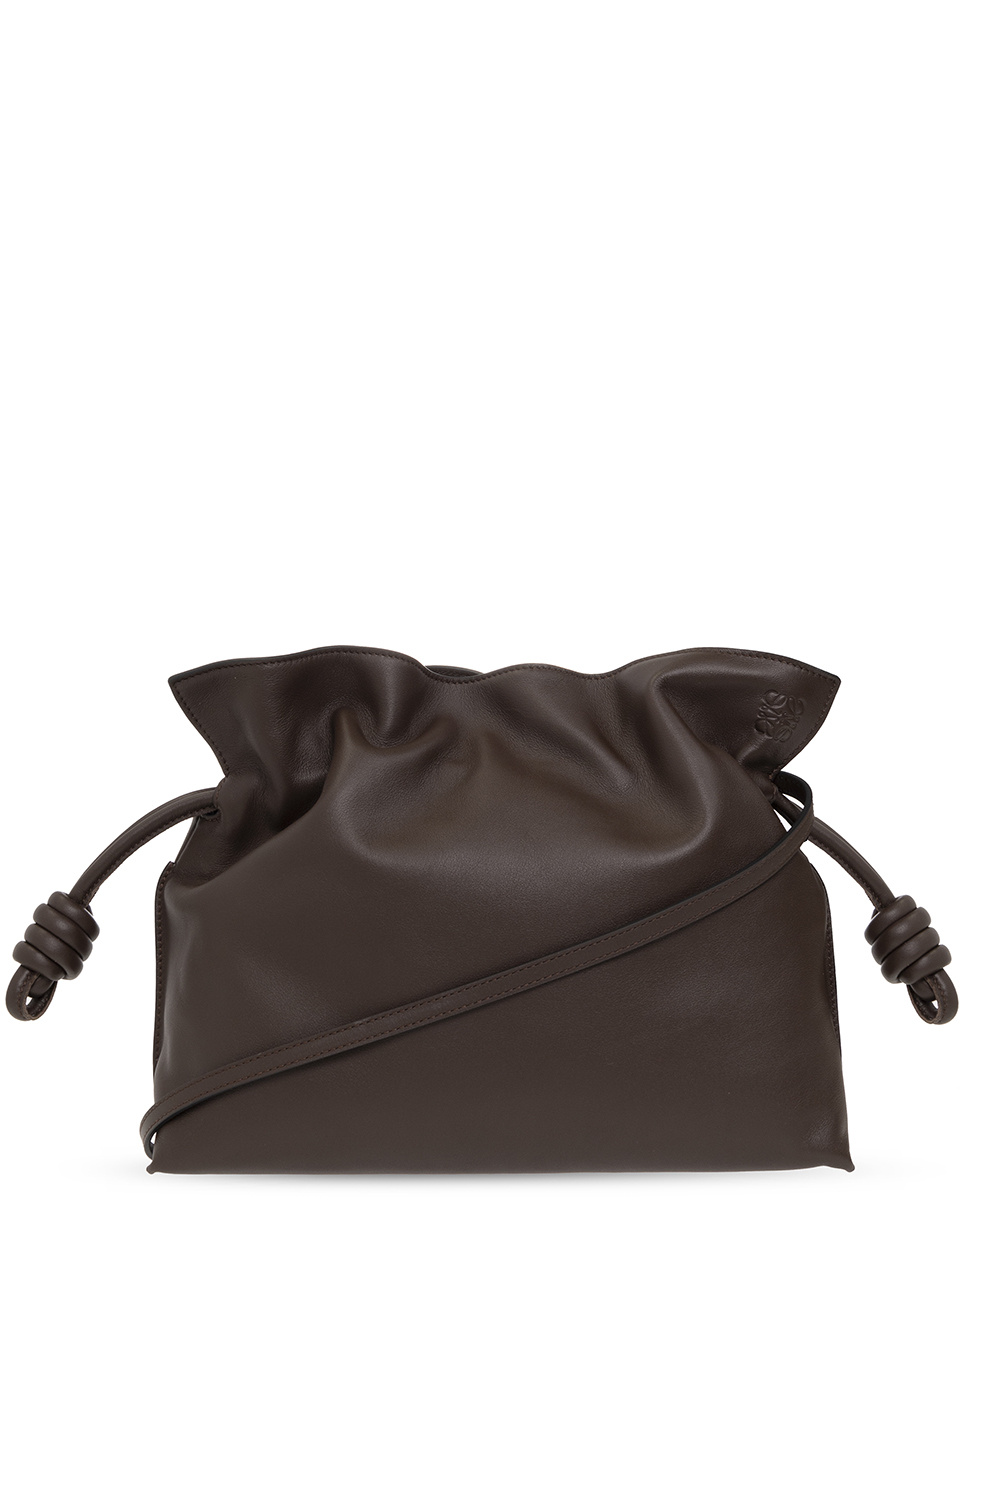 Loewe ‘Flamenco’ shoulder bag